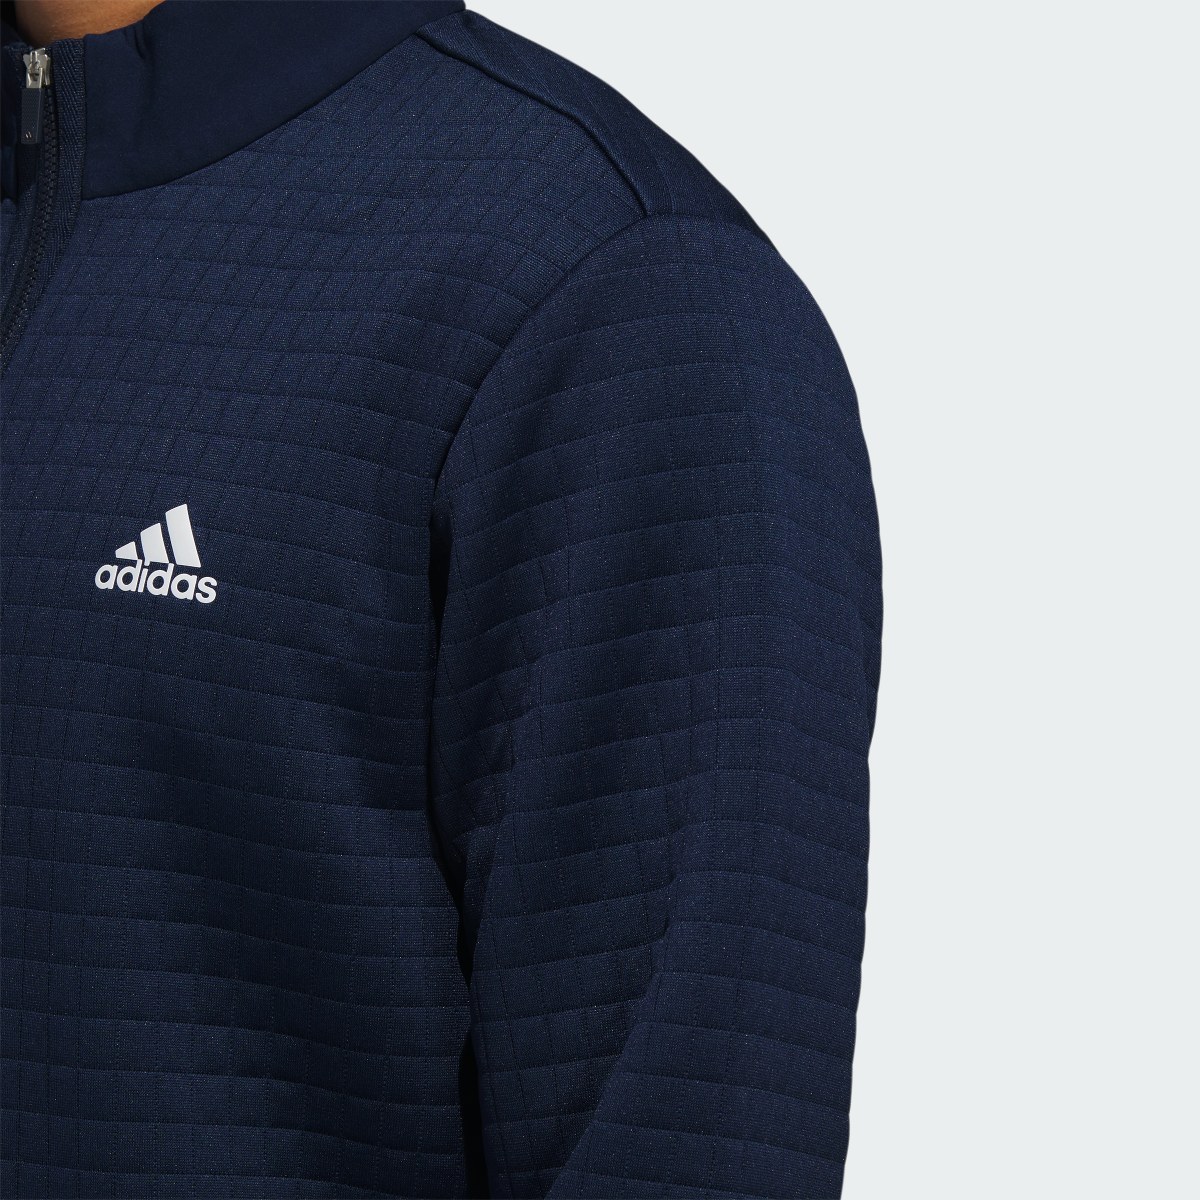 Adidas DWR 1/4-Zip Sweatshirt. 6